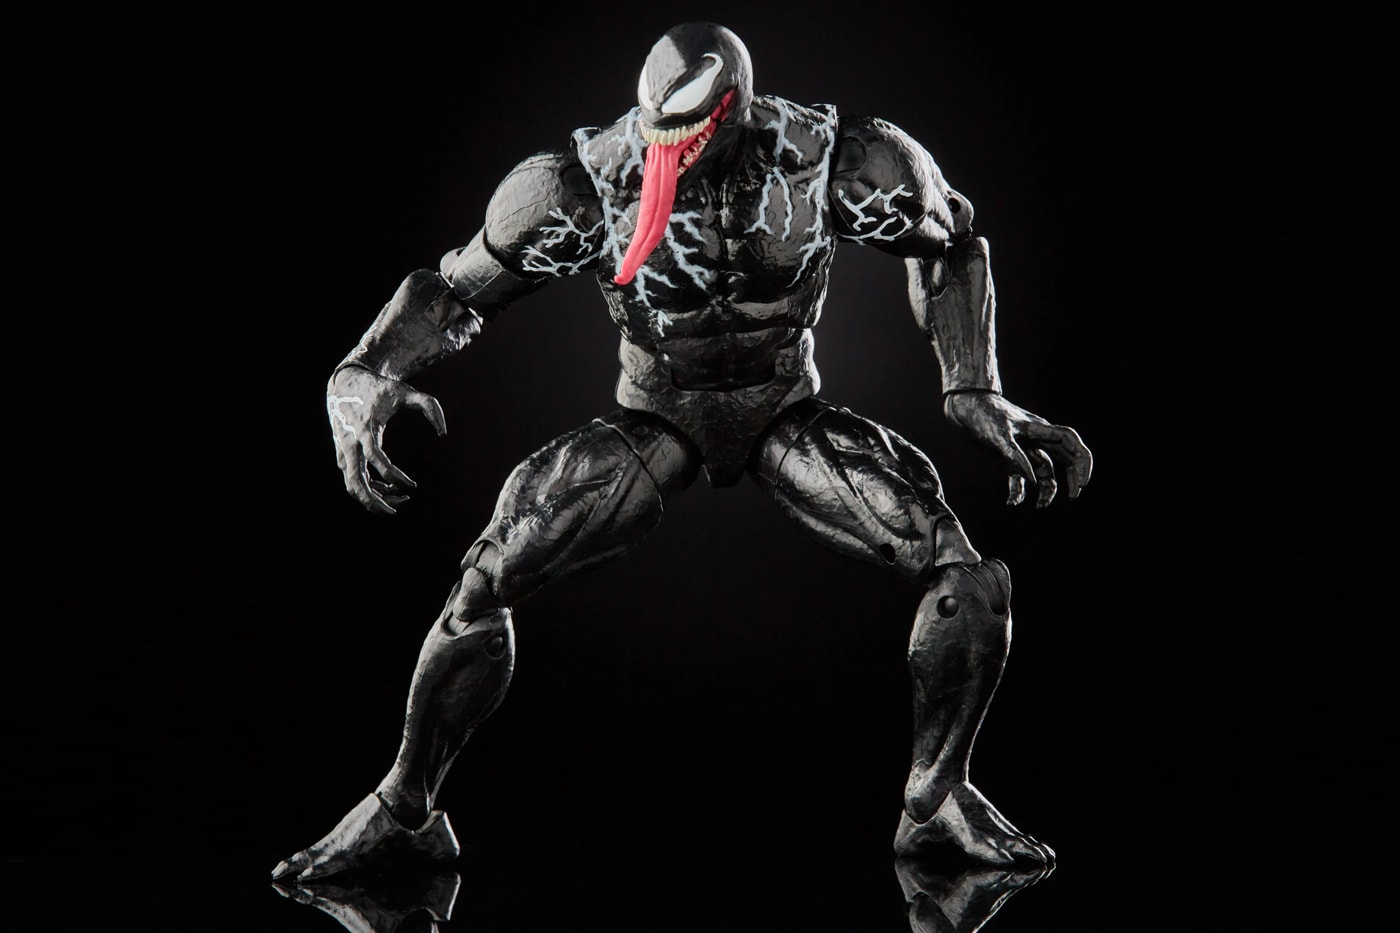 Marvel Legends Venom Series Action Figures Release